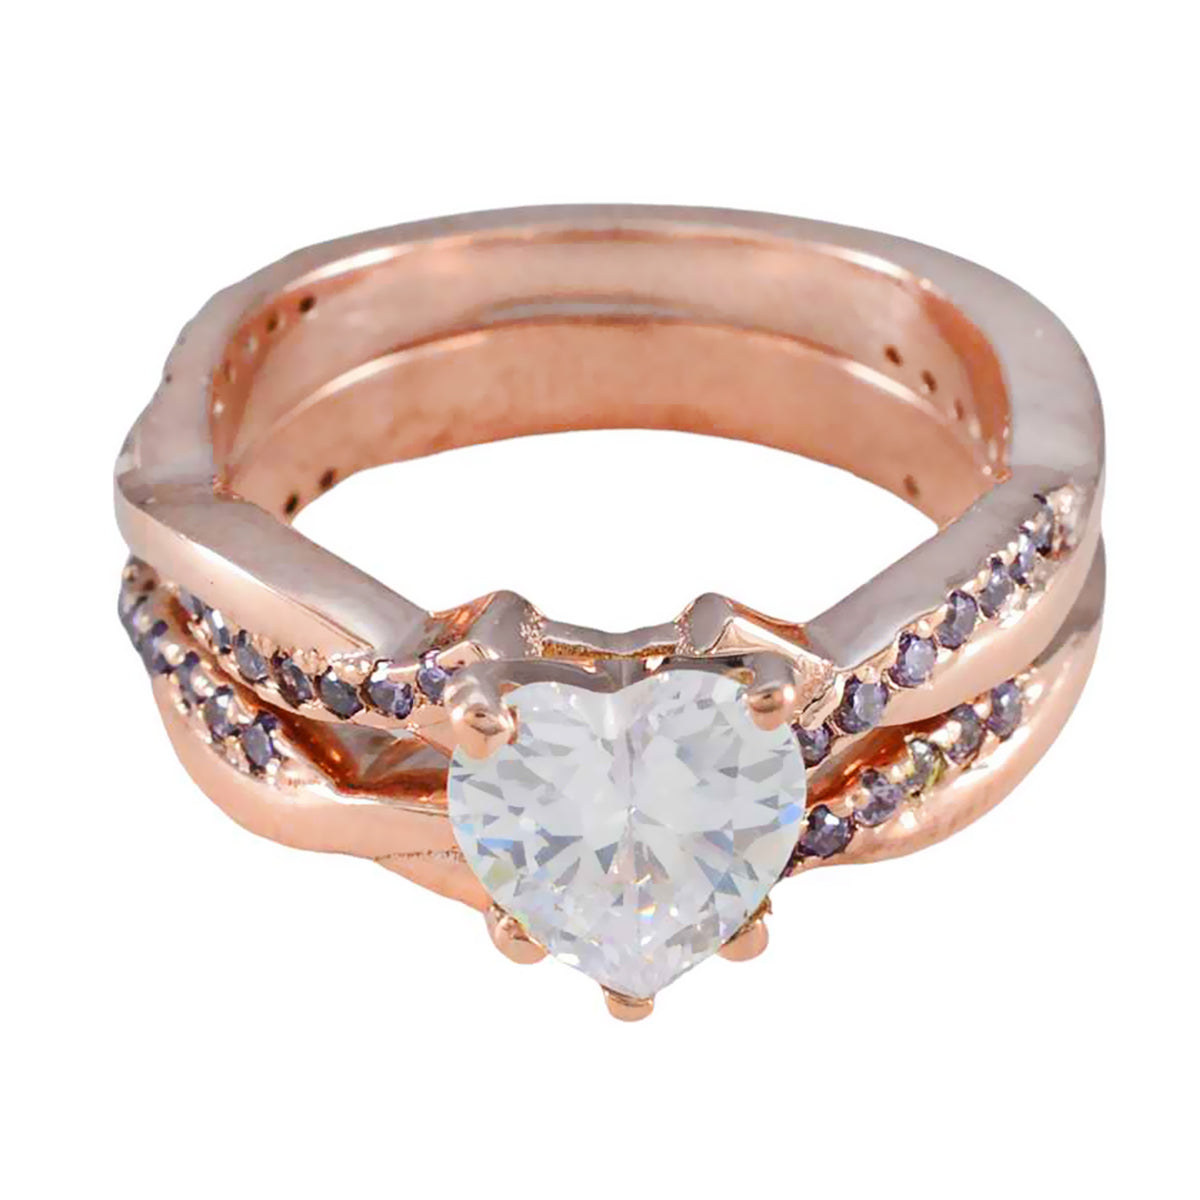 Riyo volwassen zilveren ring met roségouden amethist steen hartvorm griffenzetting mode-sieraden Valentijnsdag ring